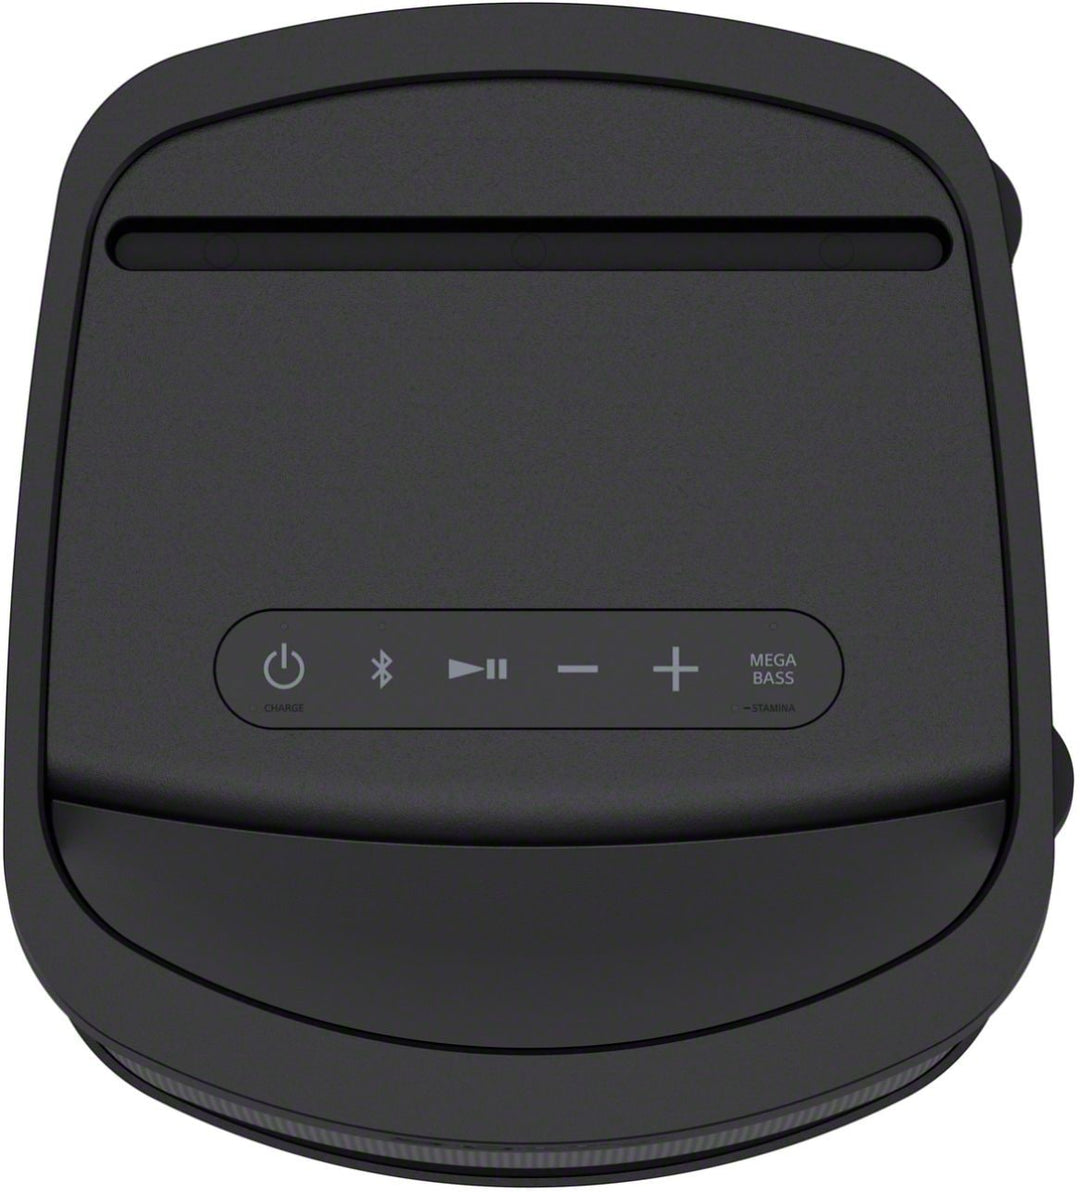 Sony - Portable Bluetooth Speaker - Black_8